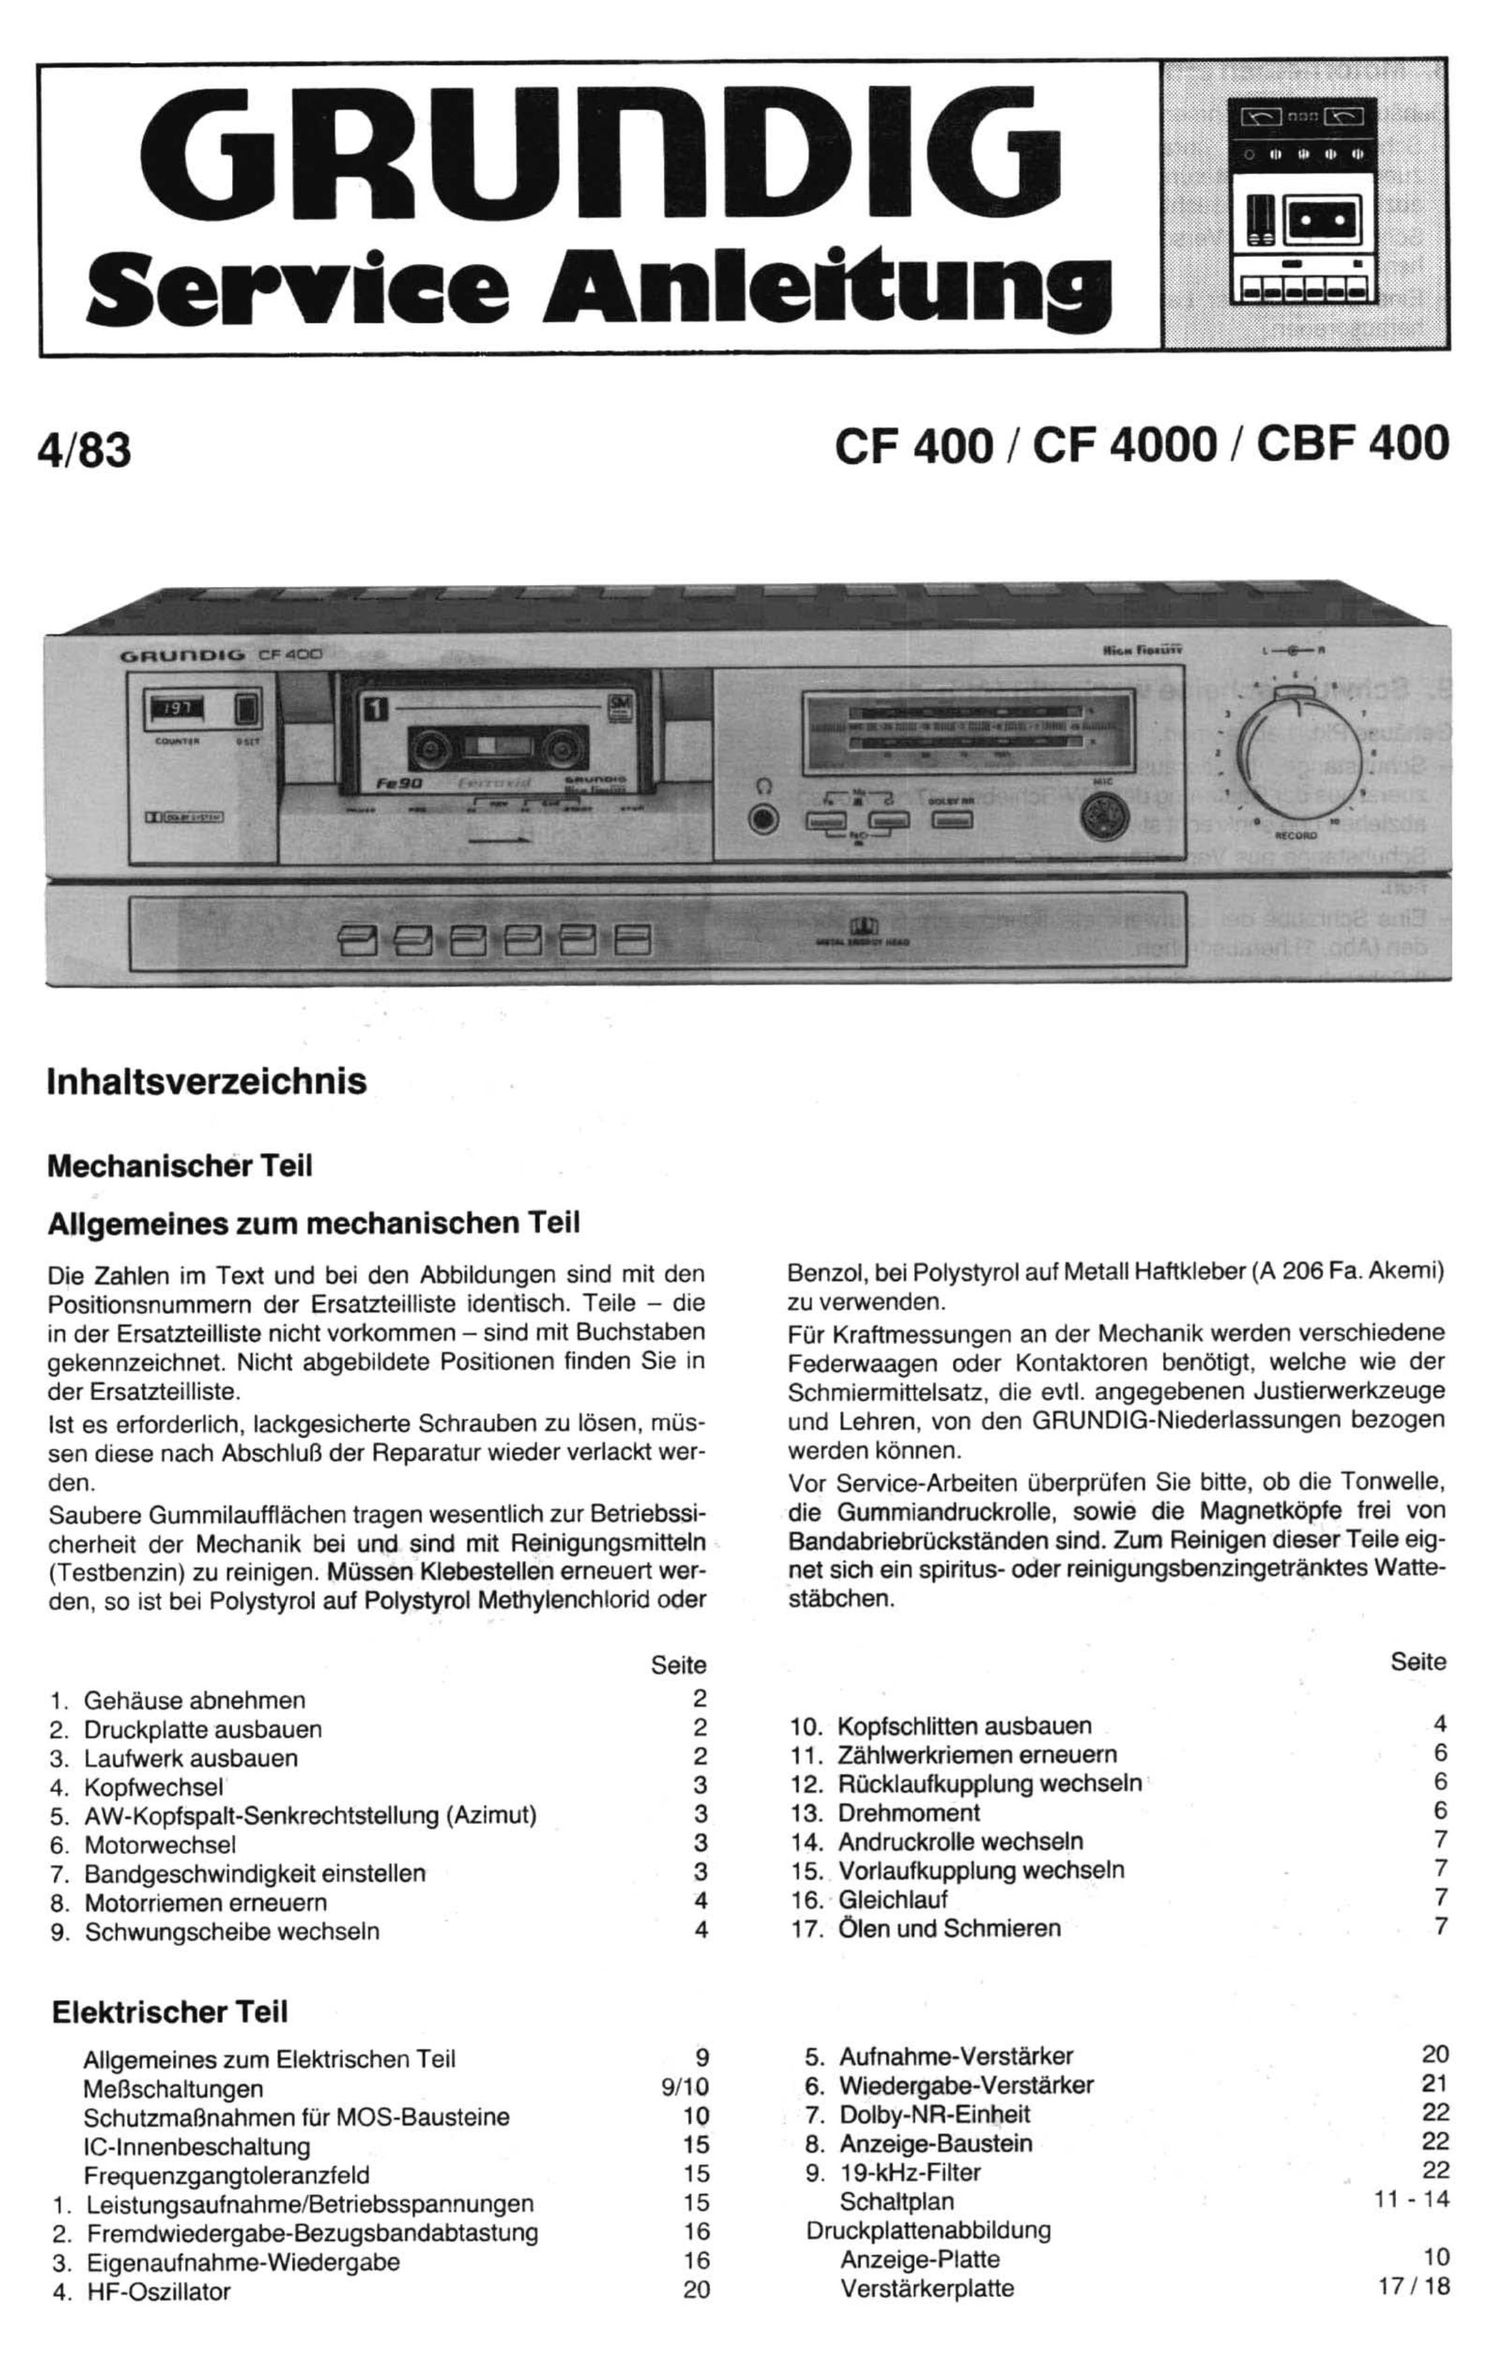 Grundig CF 400 Service Manual